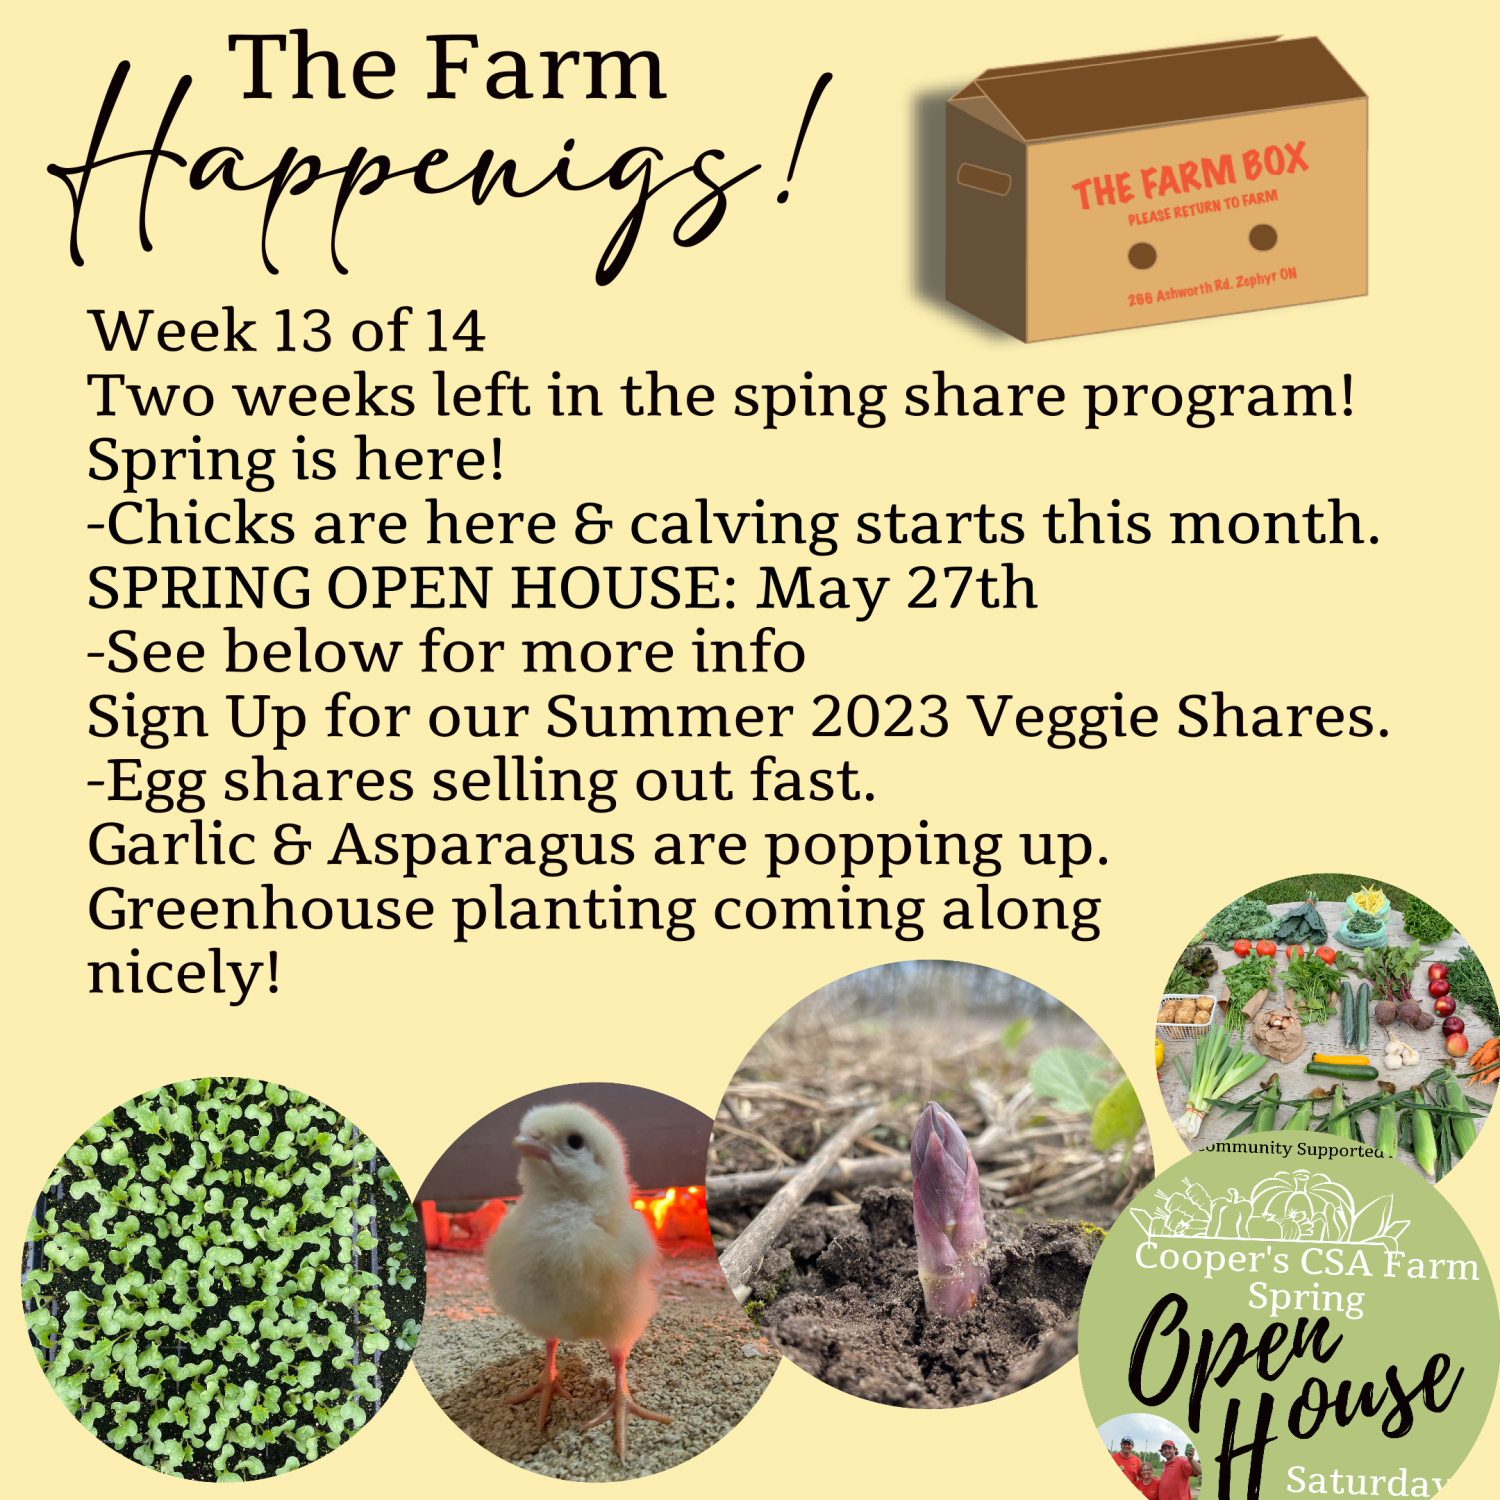 Next Happening: "The Farm Box"-Coopers CSA Farm Farm Happenings Week 13